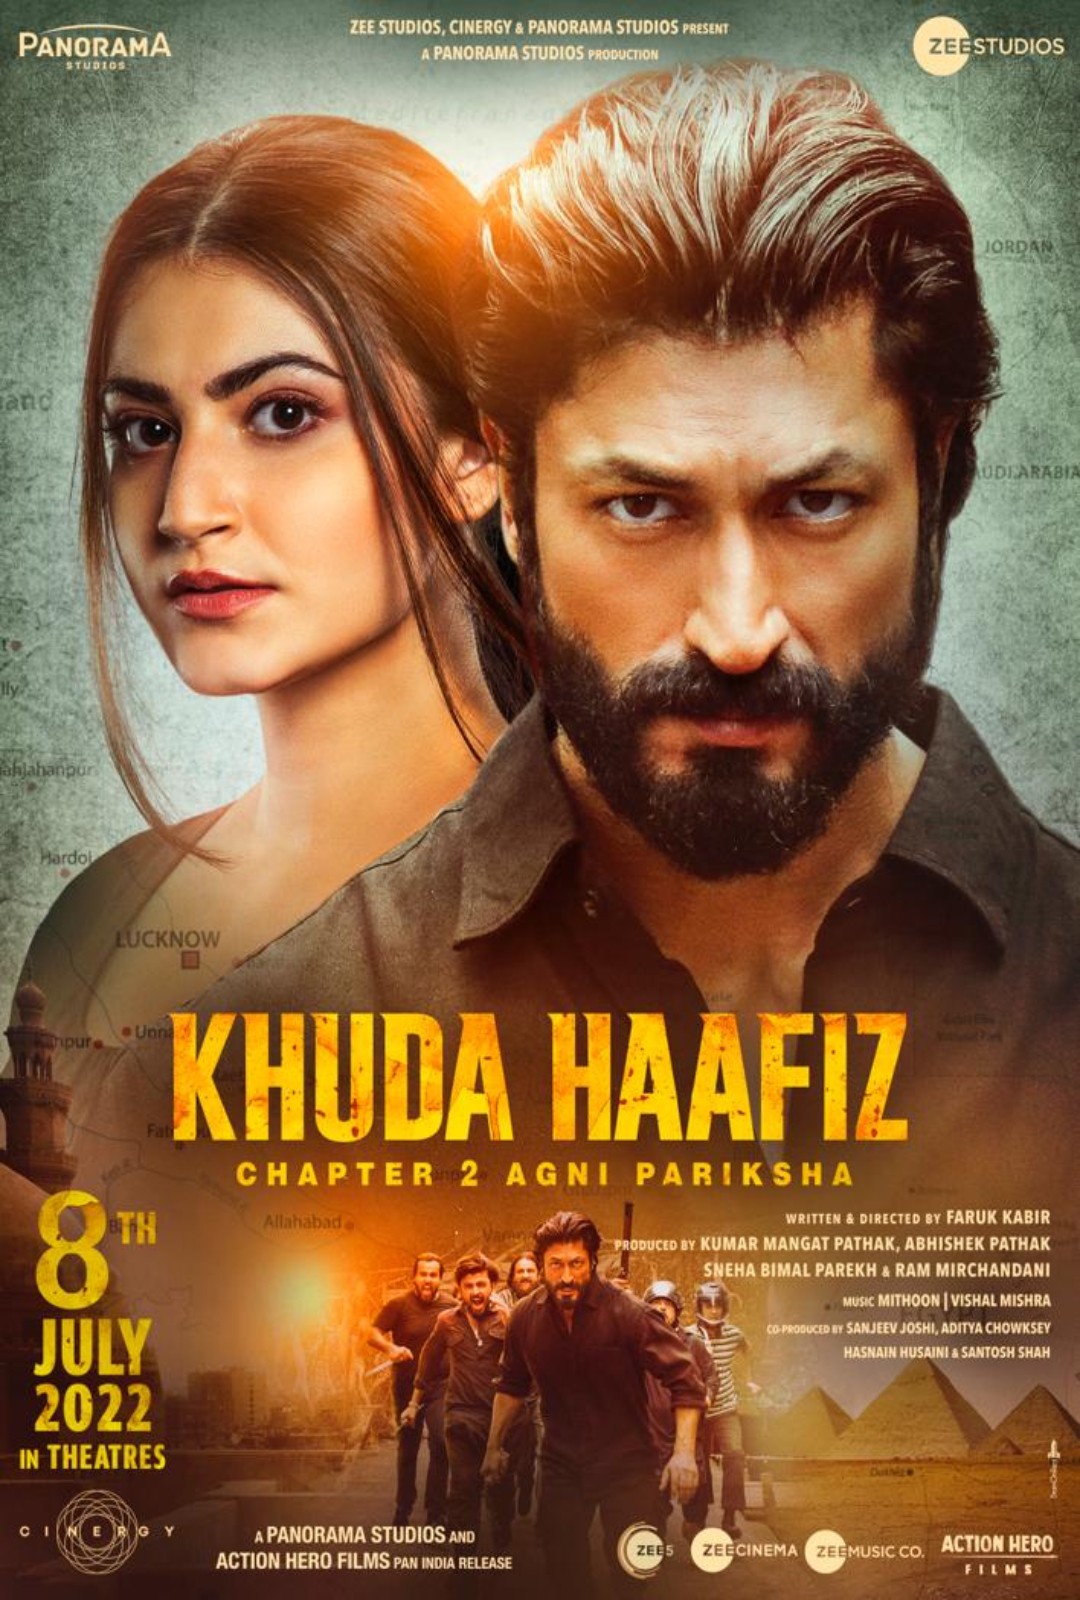 Khuda Haafiz Chapter 2 – Agni Pariksha V2 (2022) New Bollywood Hindi Full Movie PreDVD